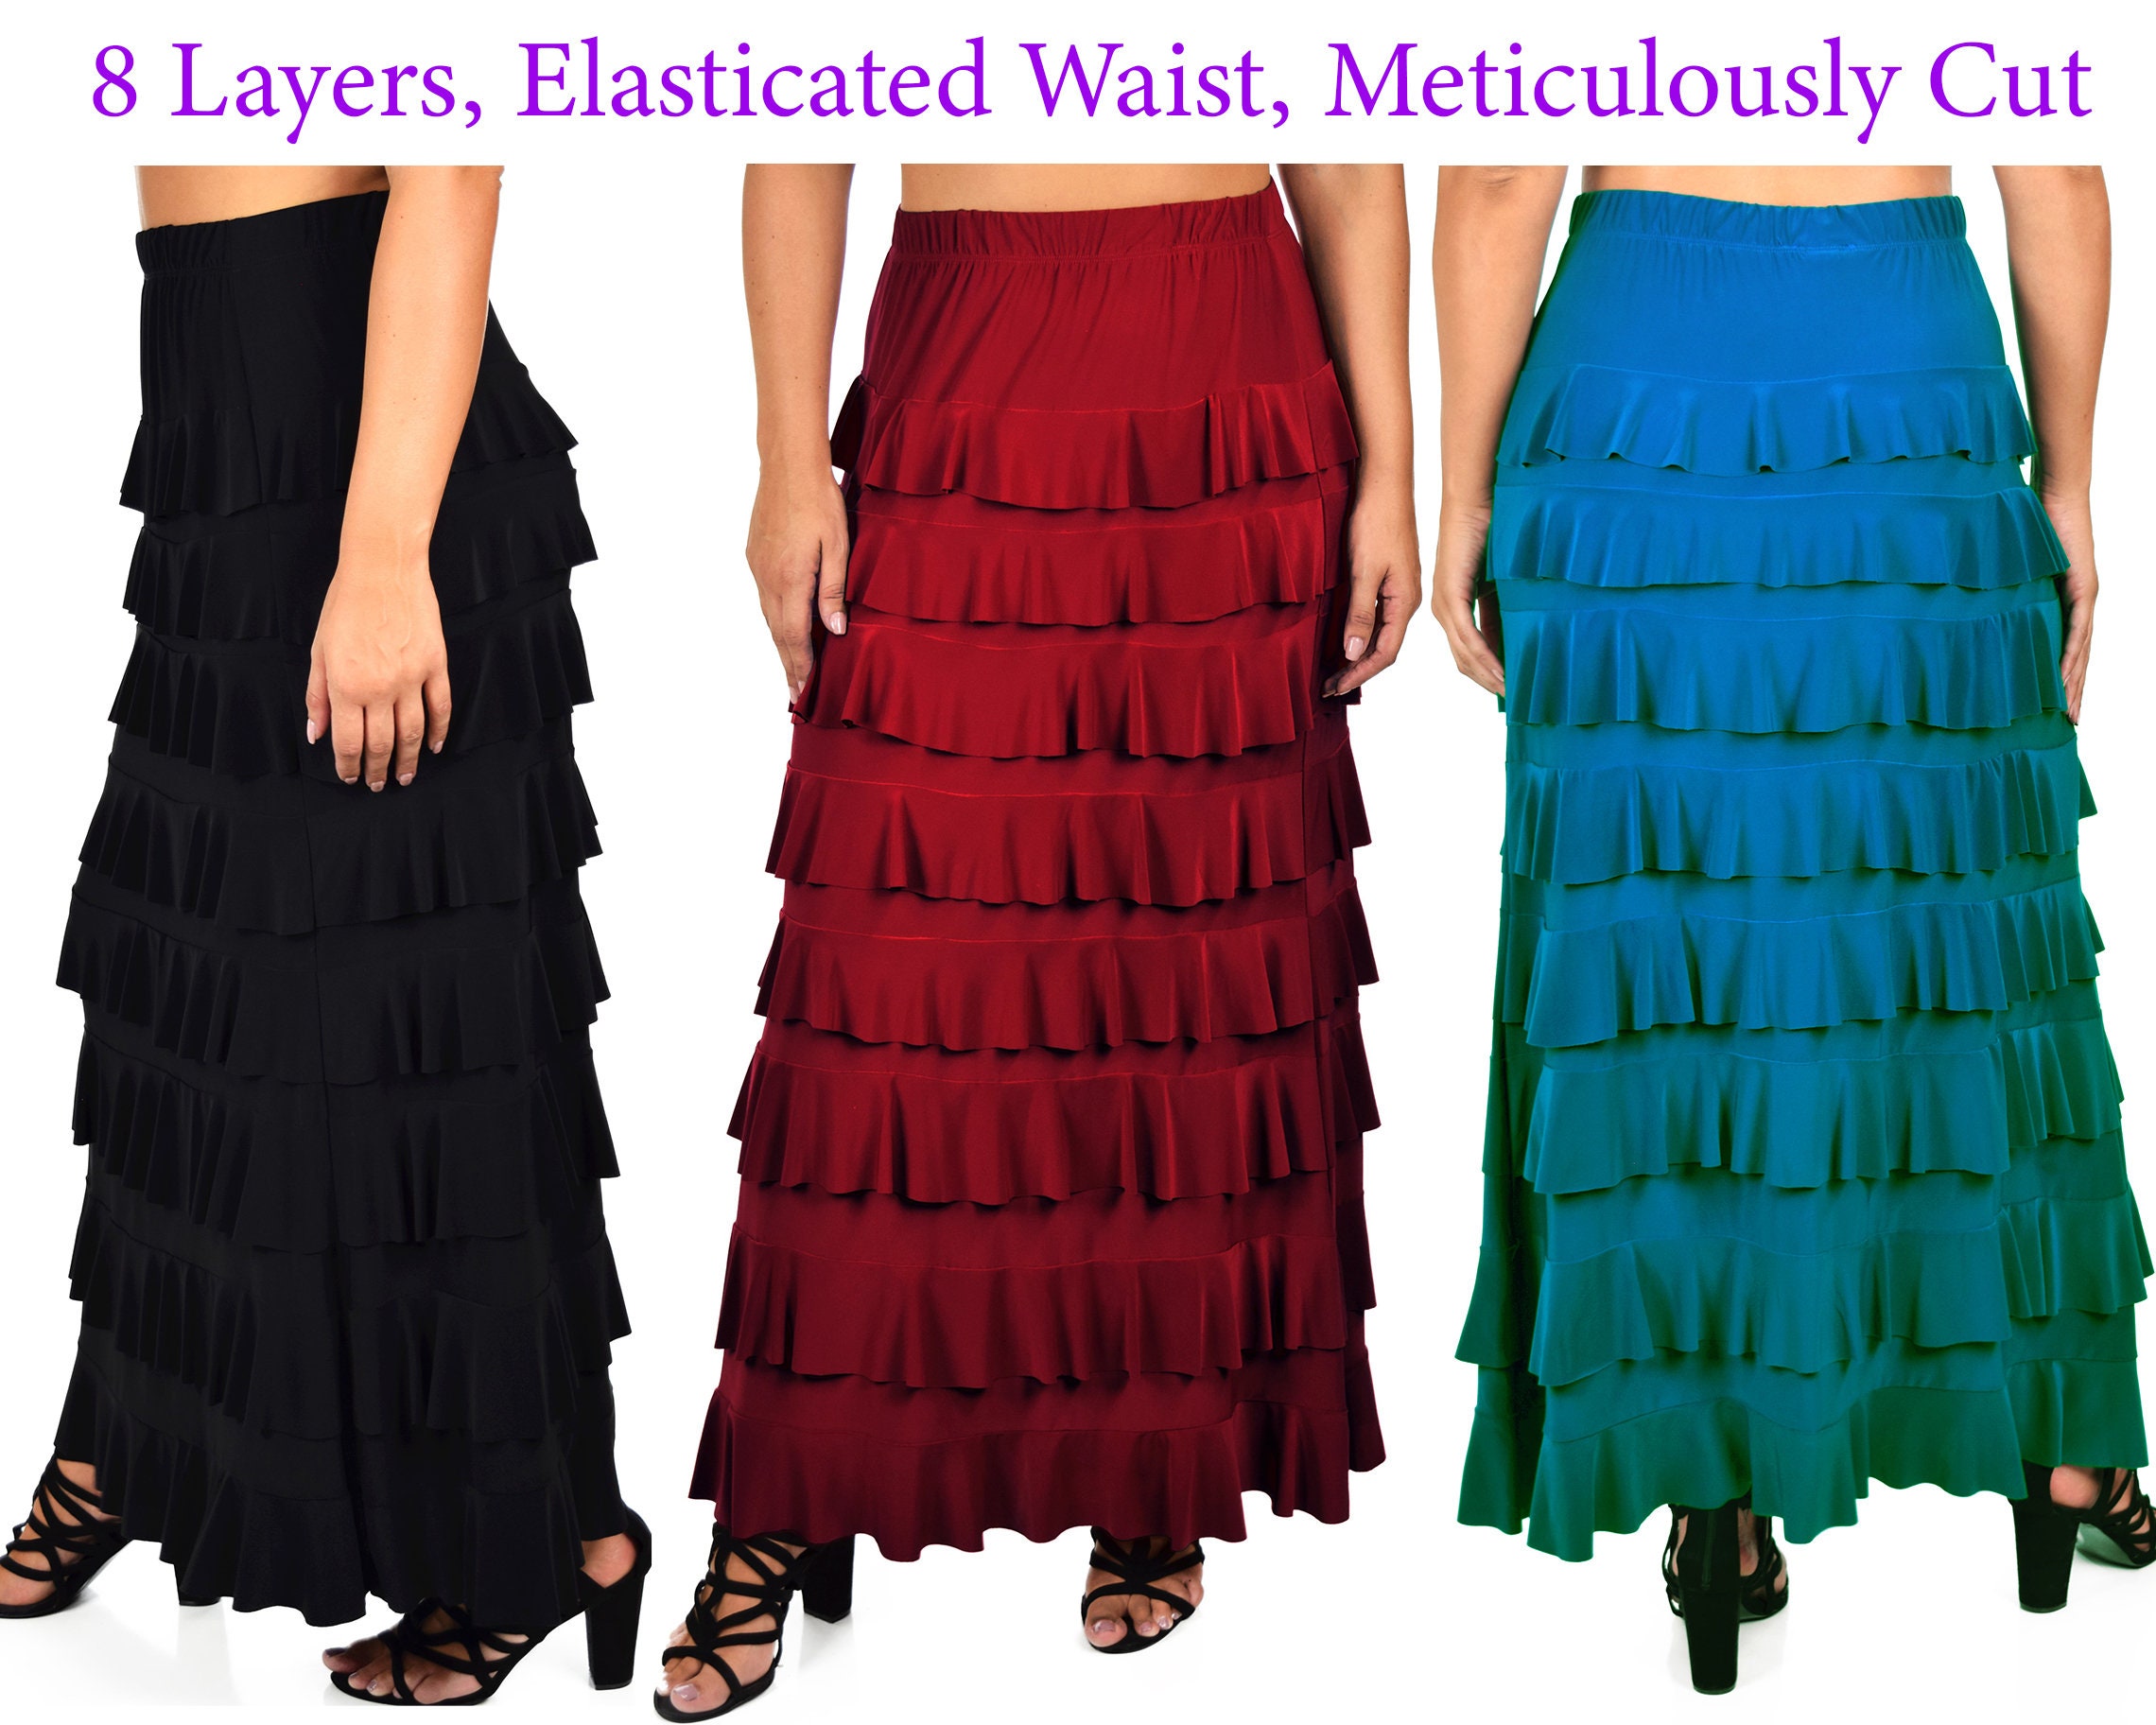 Modern colorful boho patchwork ruffled jersey skirt Dreamcatcher